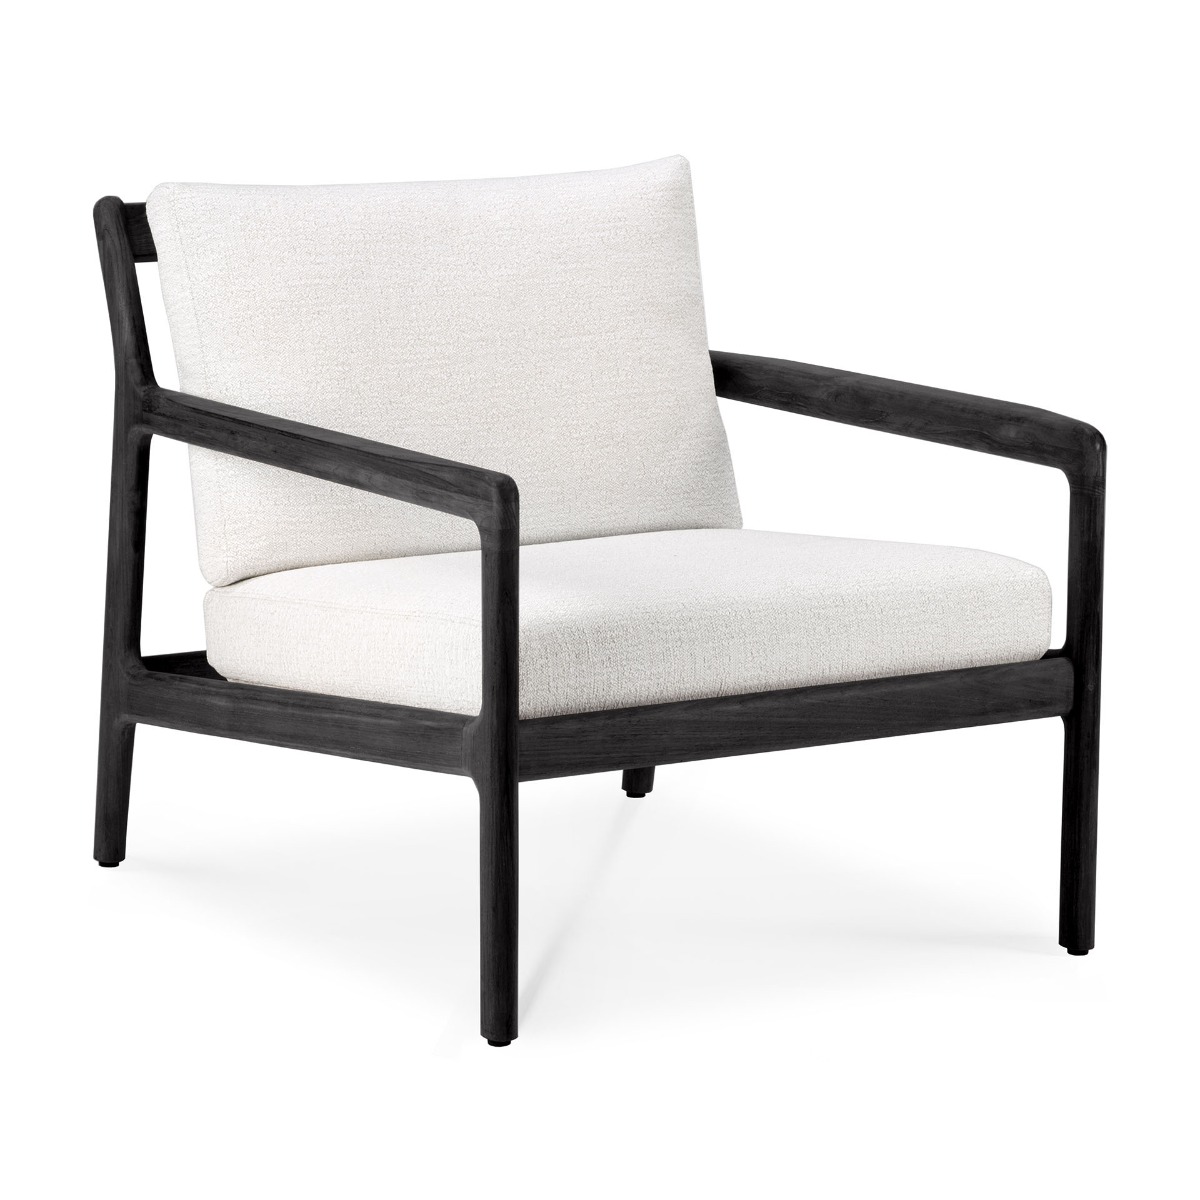 Jack outdoor lounge chair Teak Black - Off White